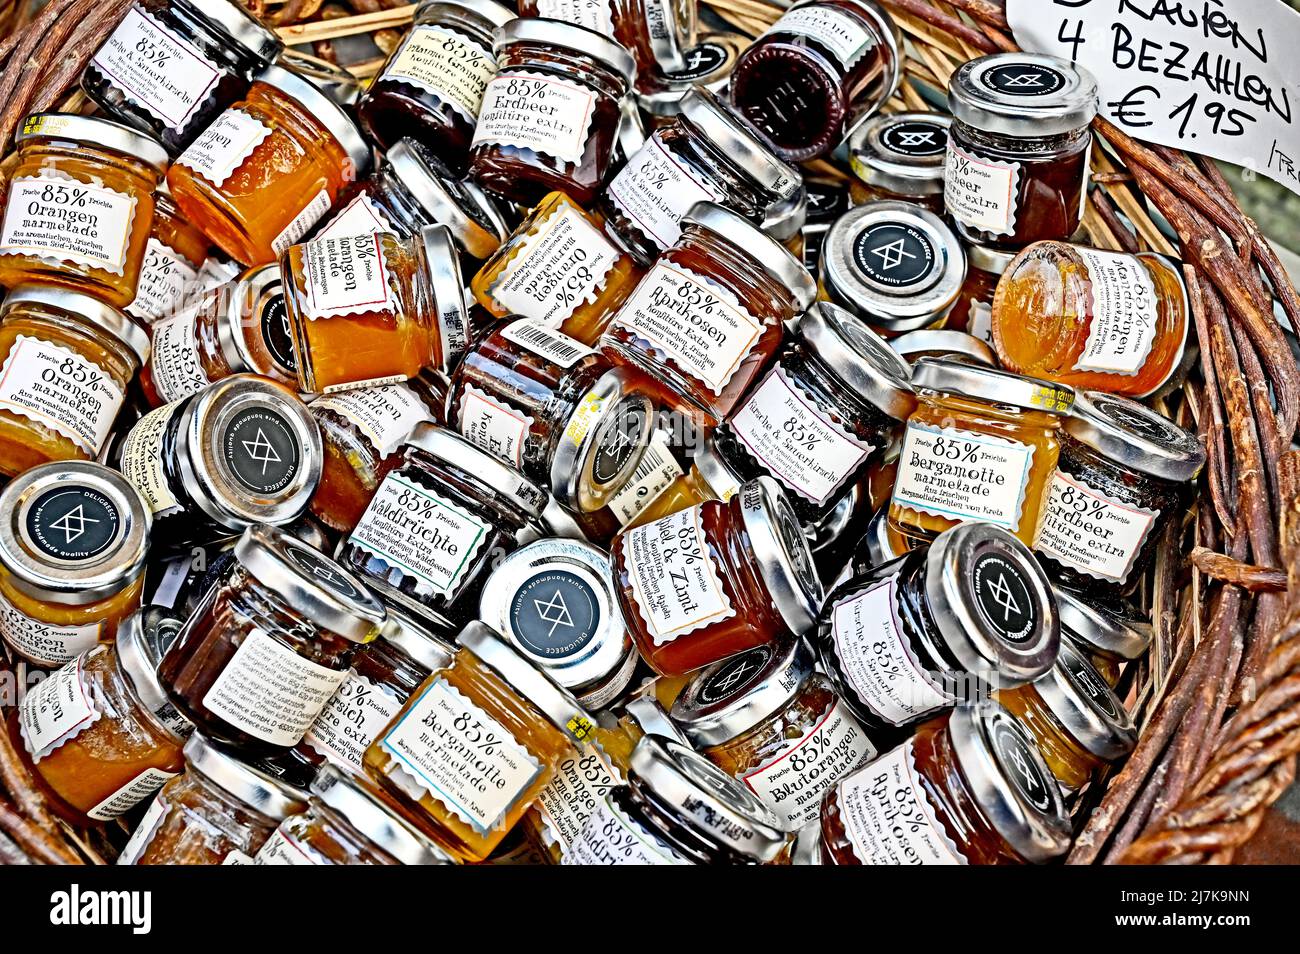 Little glasses of jam or marmelade on display; Mini Gläser mit Marmelade im Korb als Angebot Stock Photo